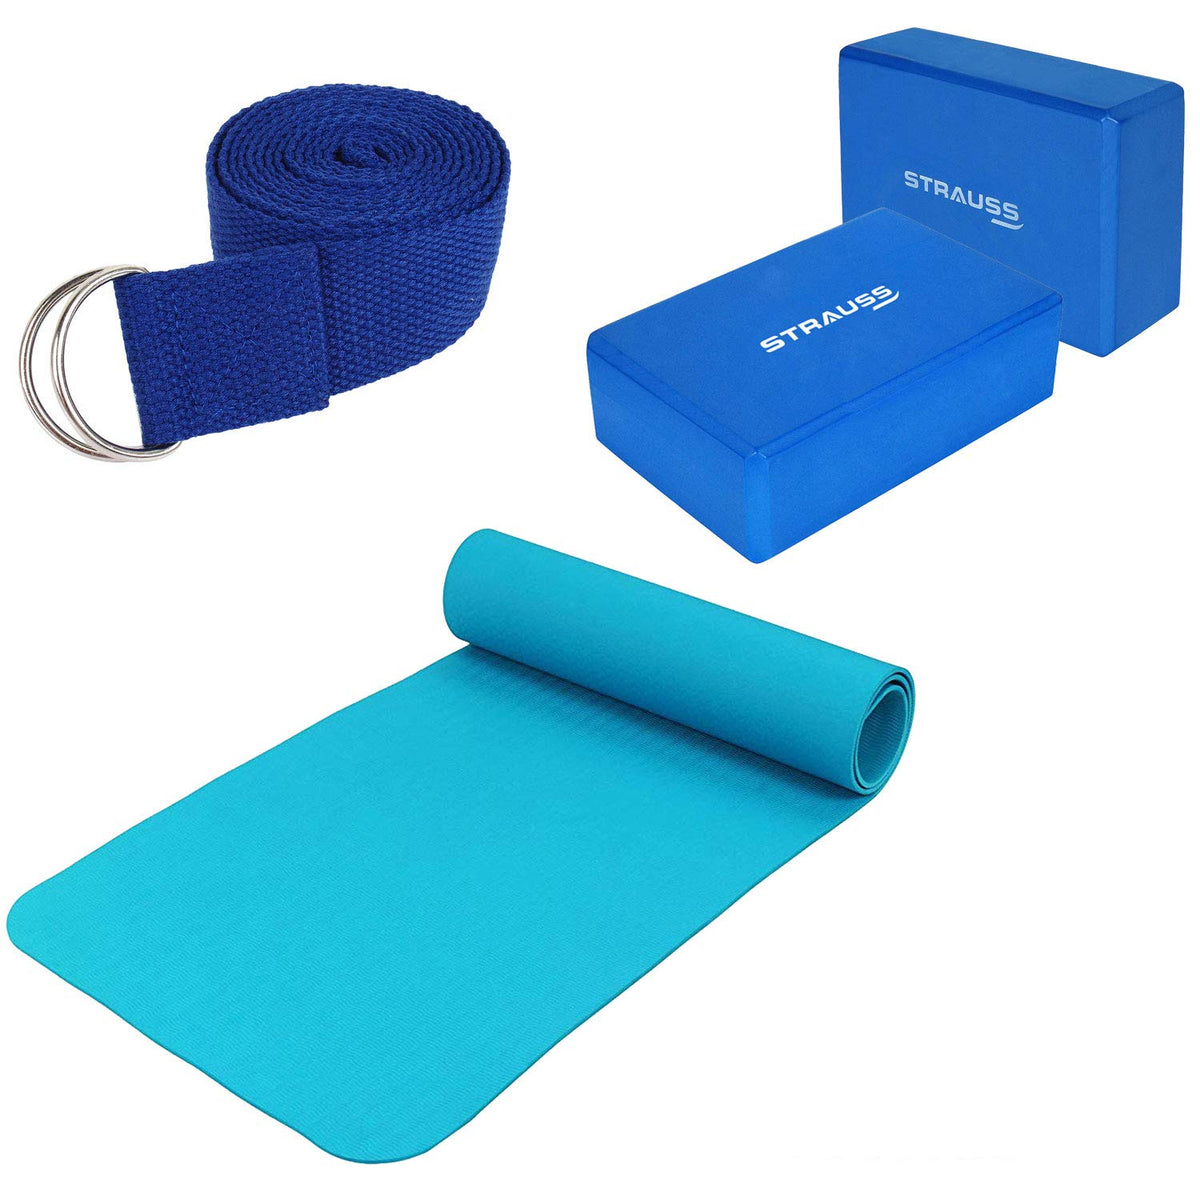 Strauss Lightweight Eco Friendly Yoga Mat 6 mm (Blue), Yoga Block (Navy Blue) Pair and Yoga Belt (Blue)